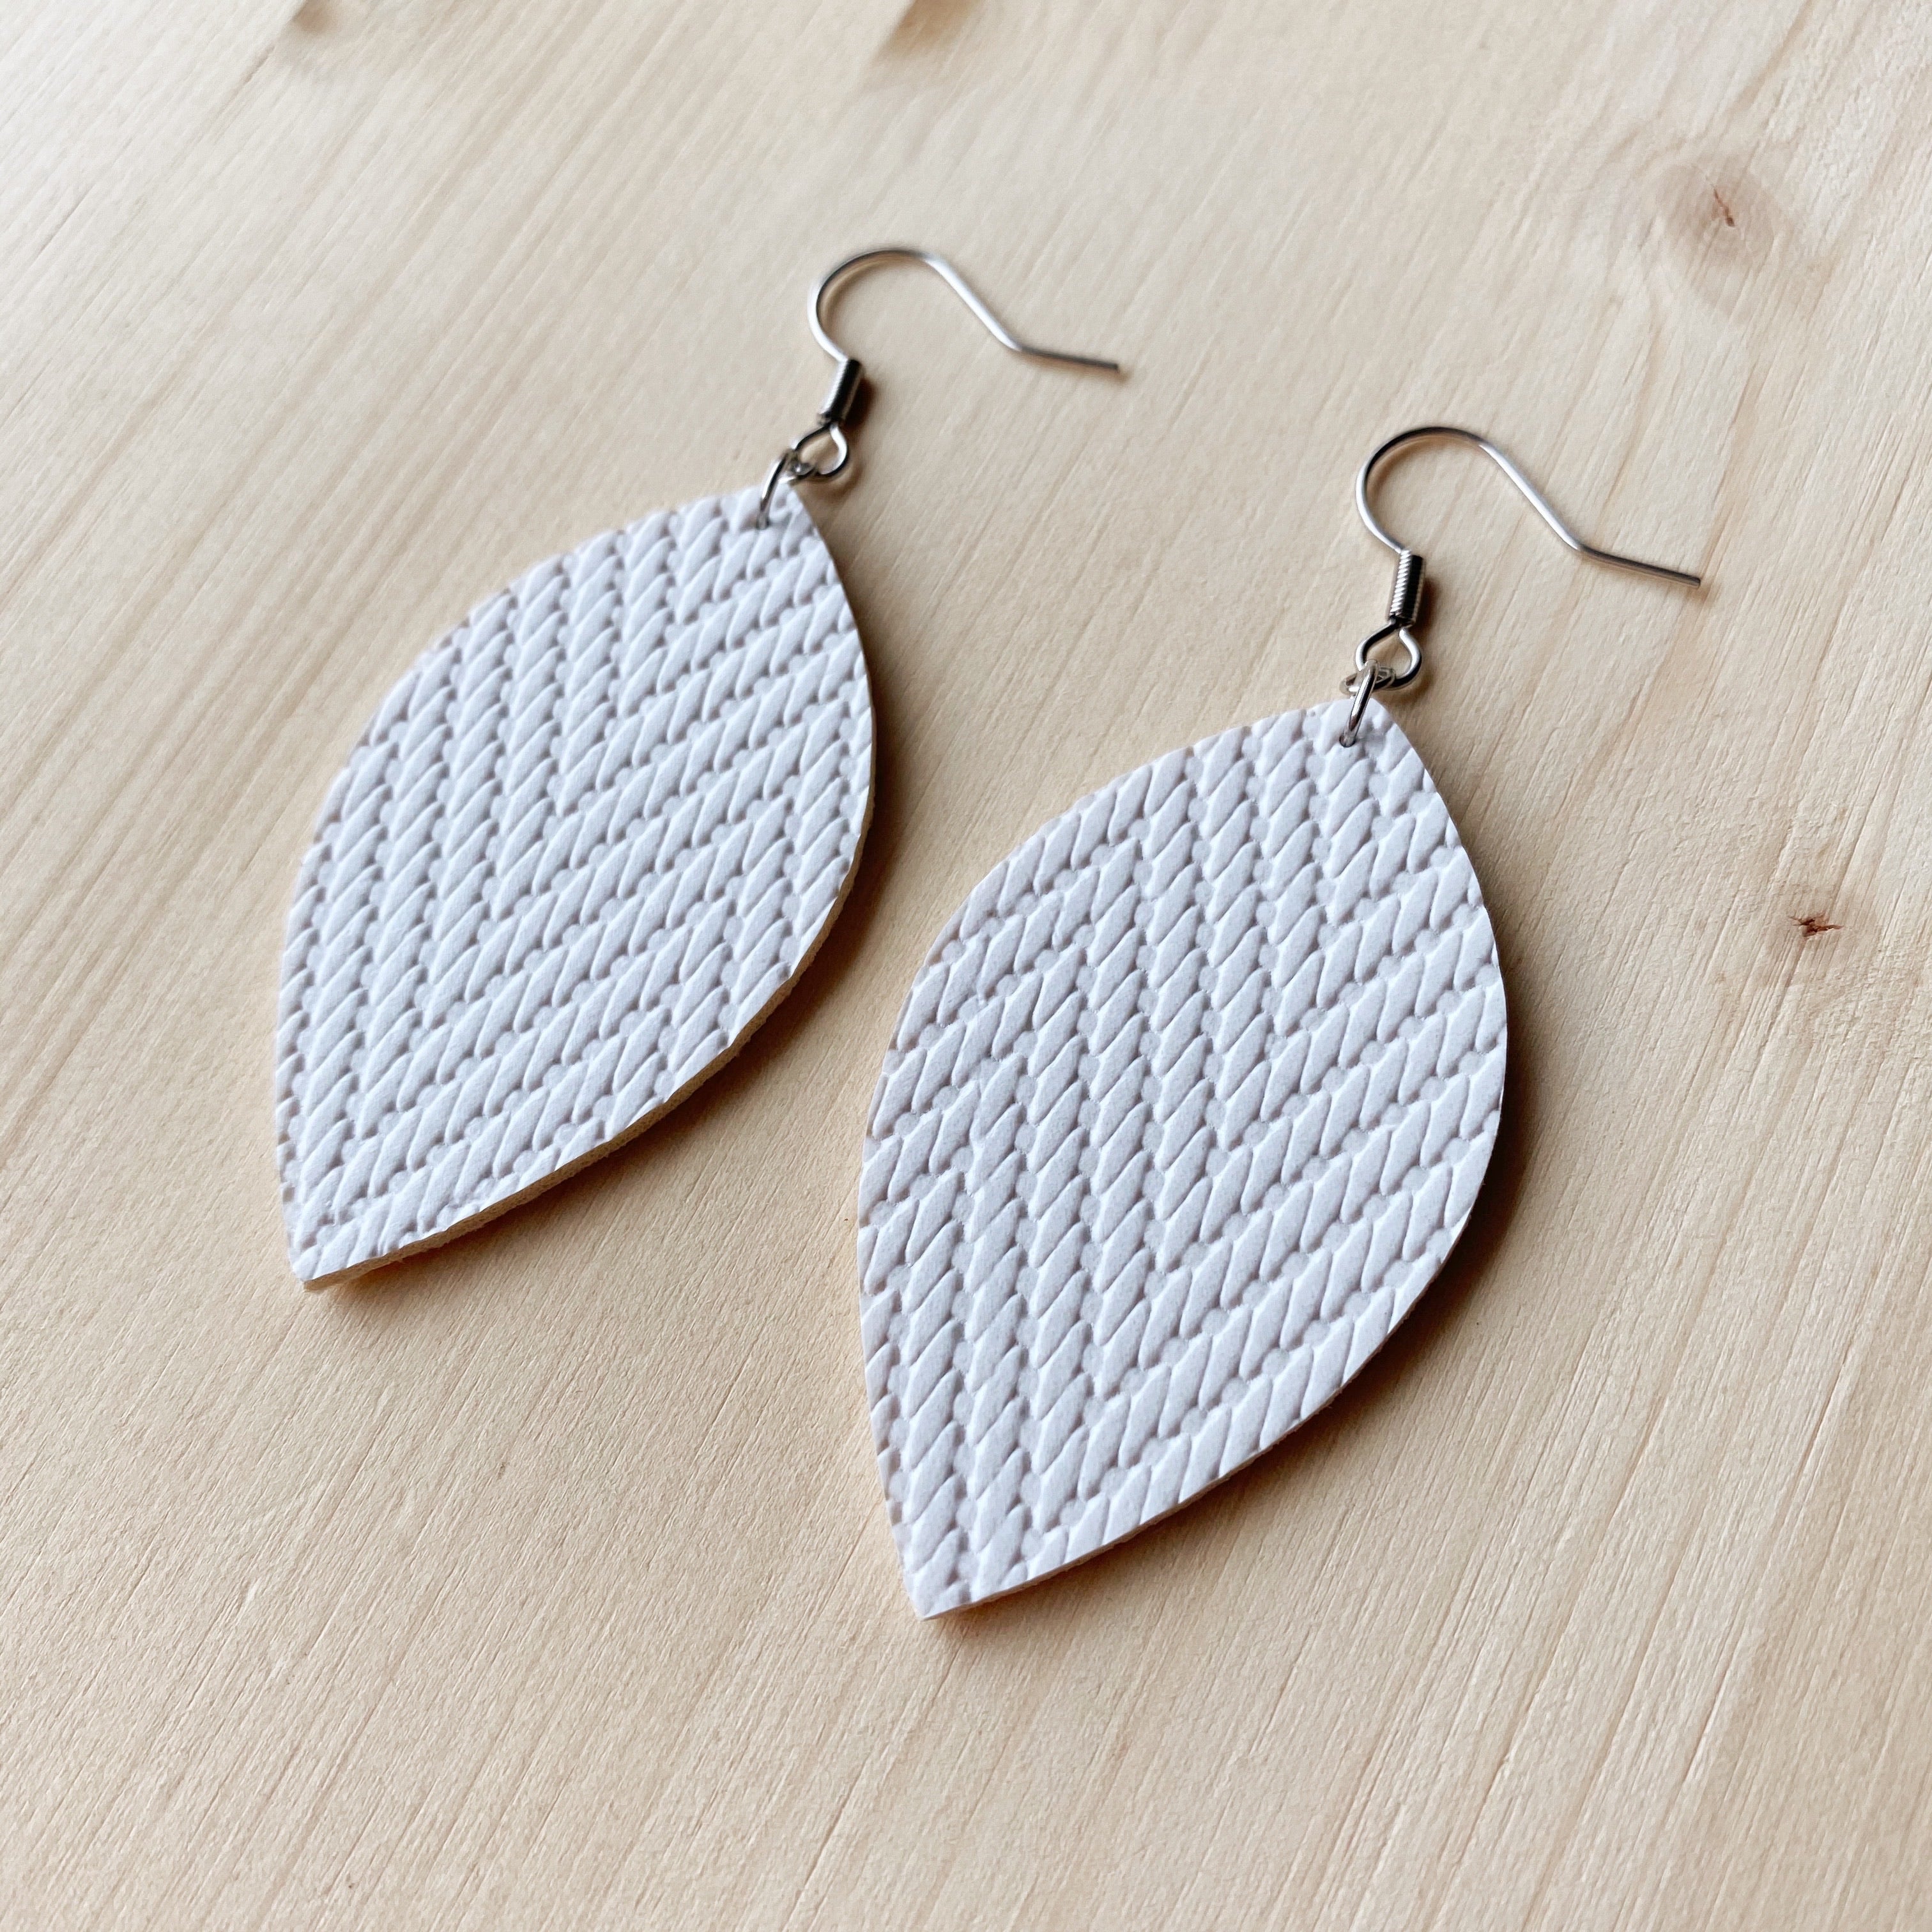 Leaf Earrings - White